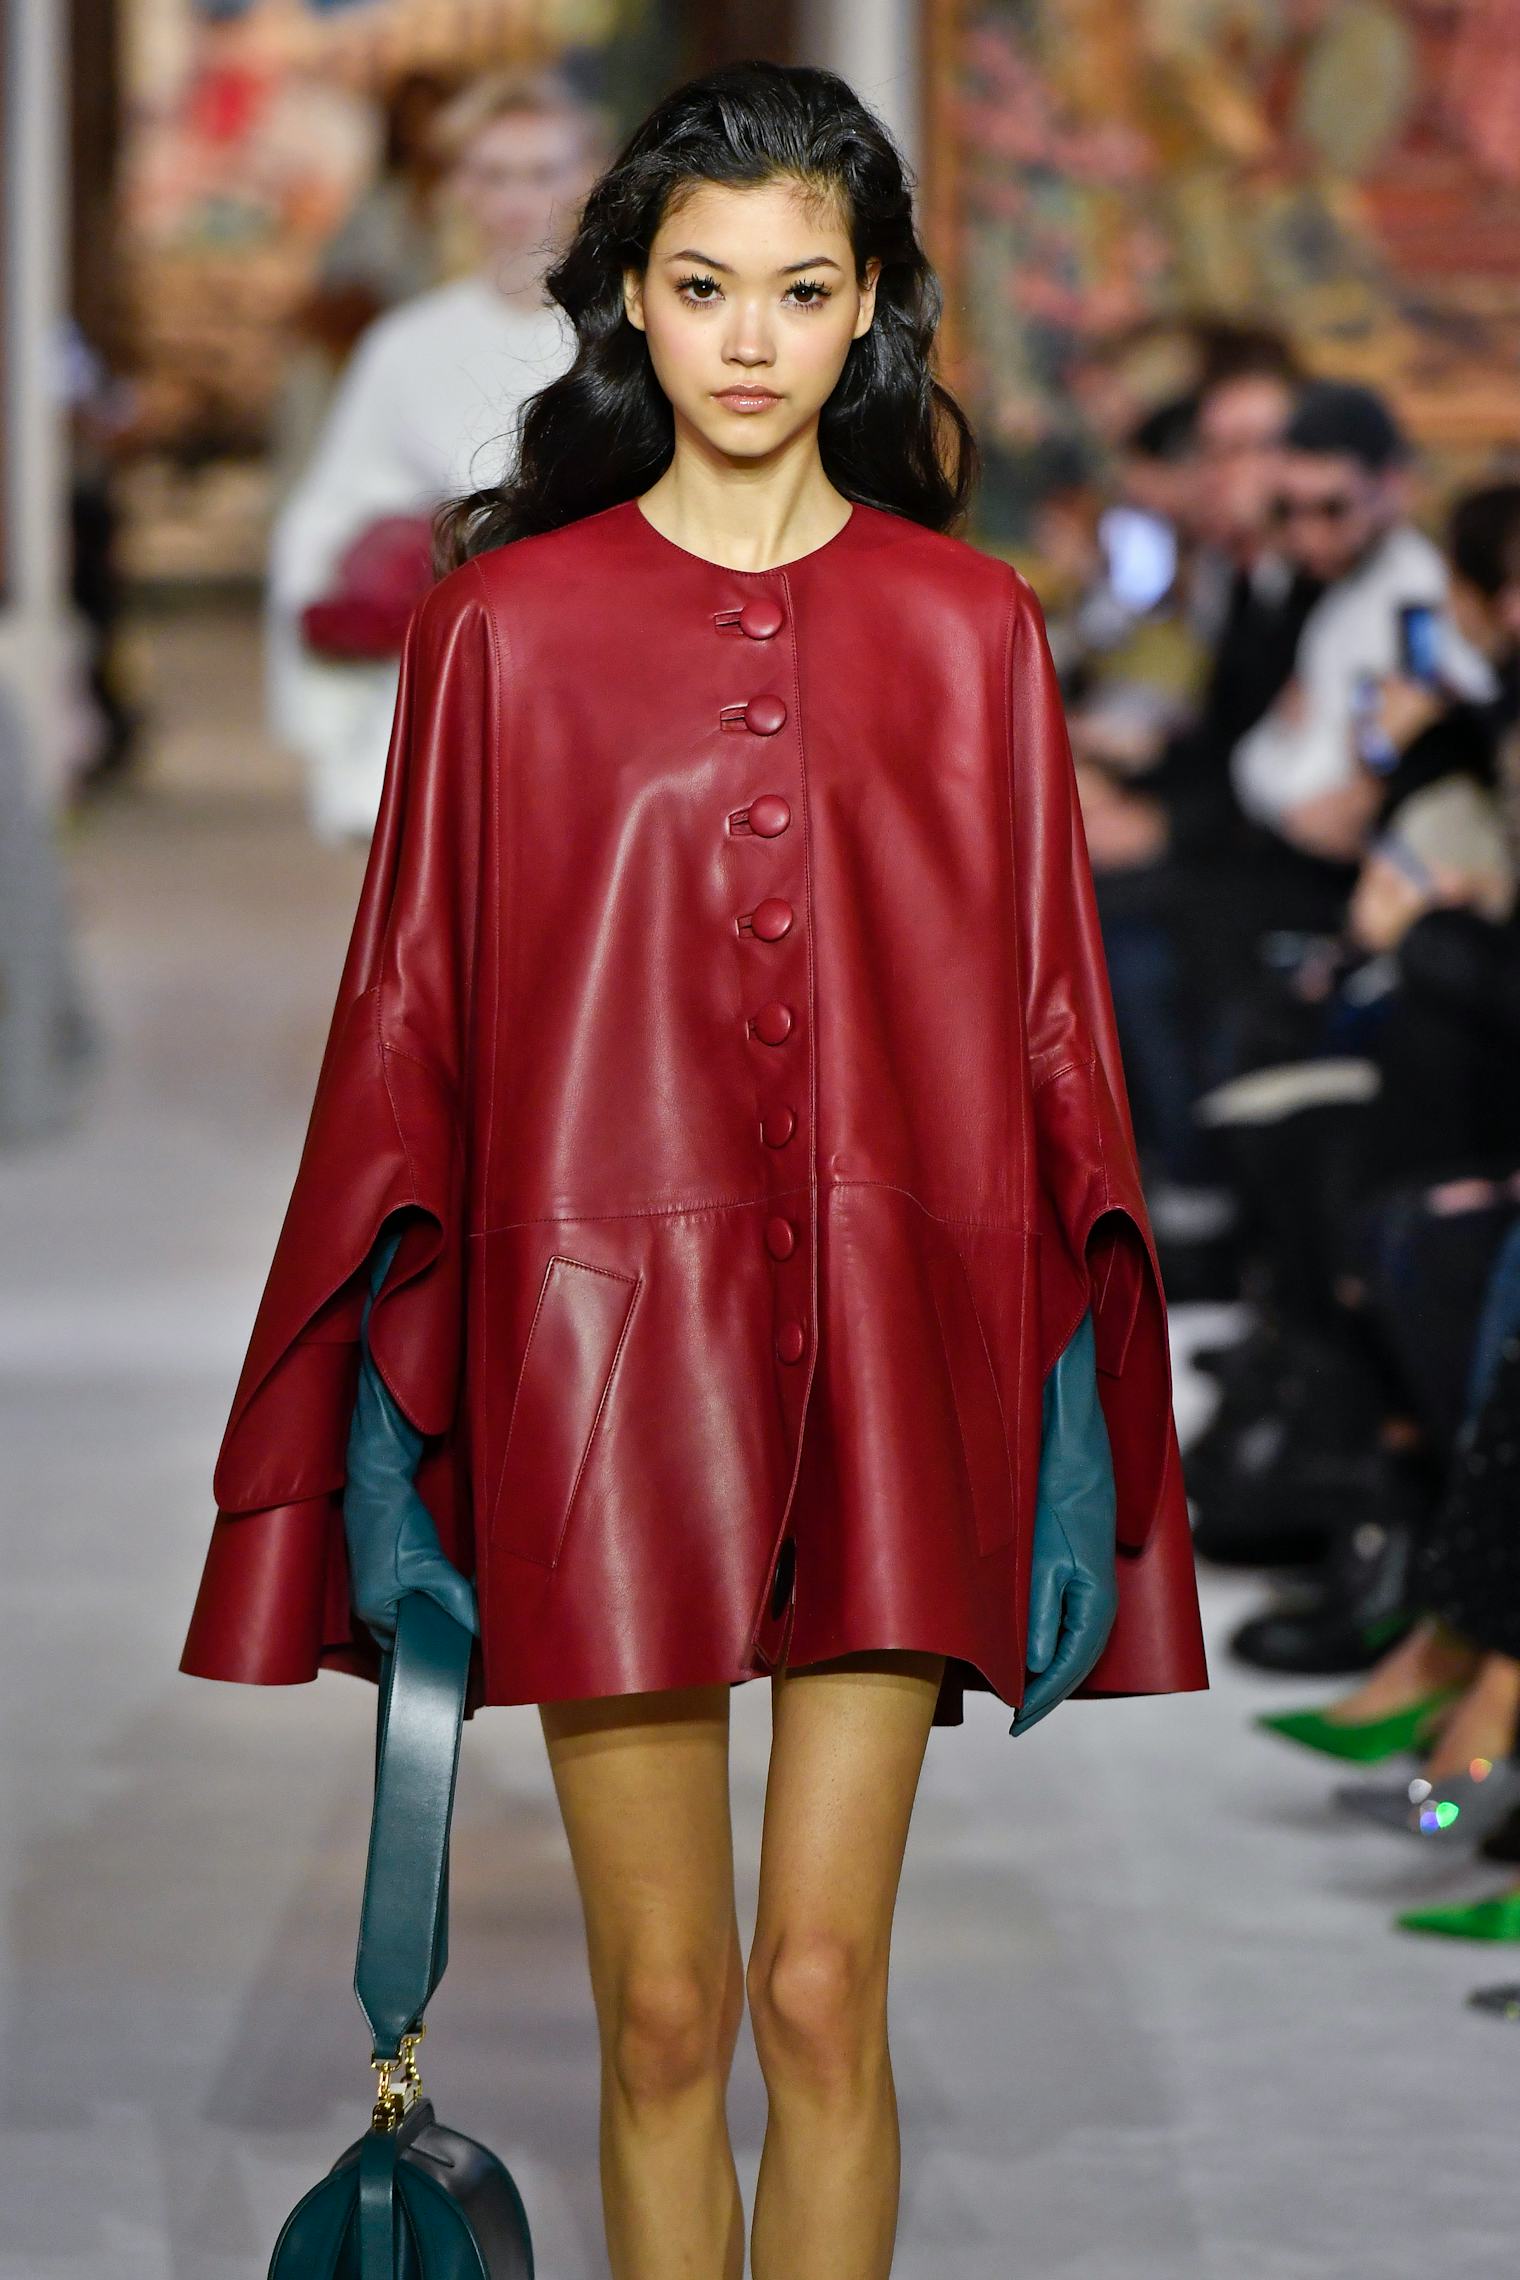 Paris Fashion Week Fall 2020 Trends: Fringe, Statement Collars, & The ...